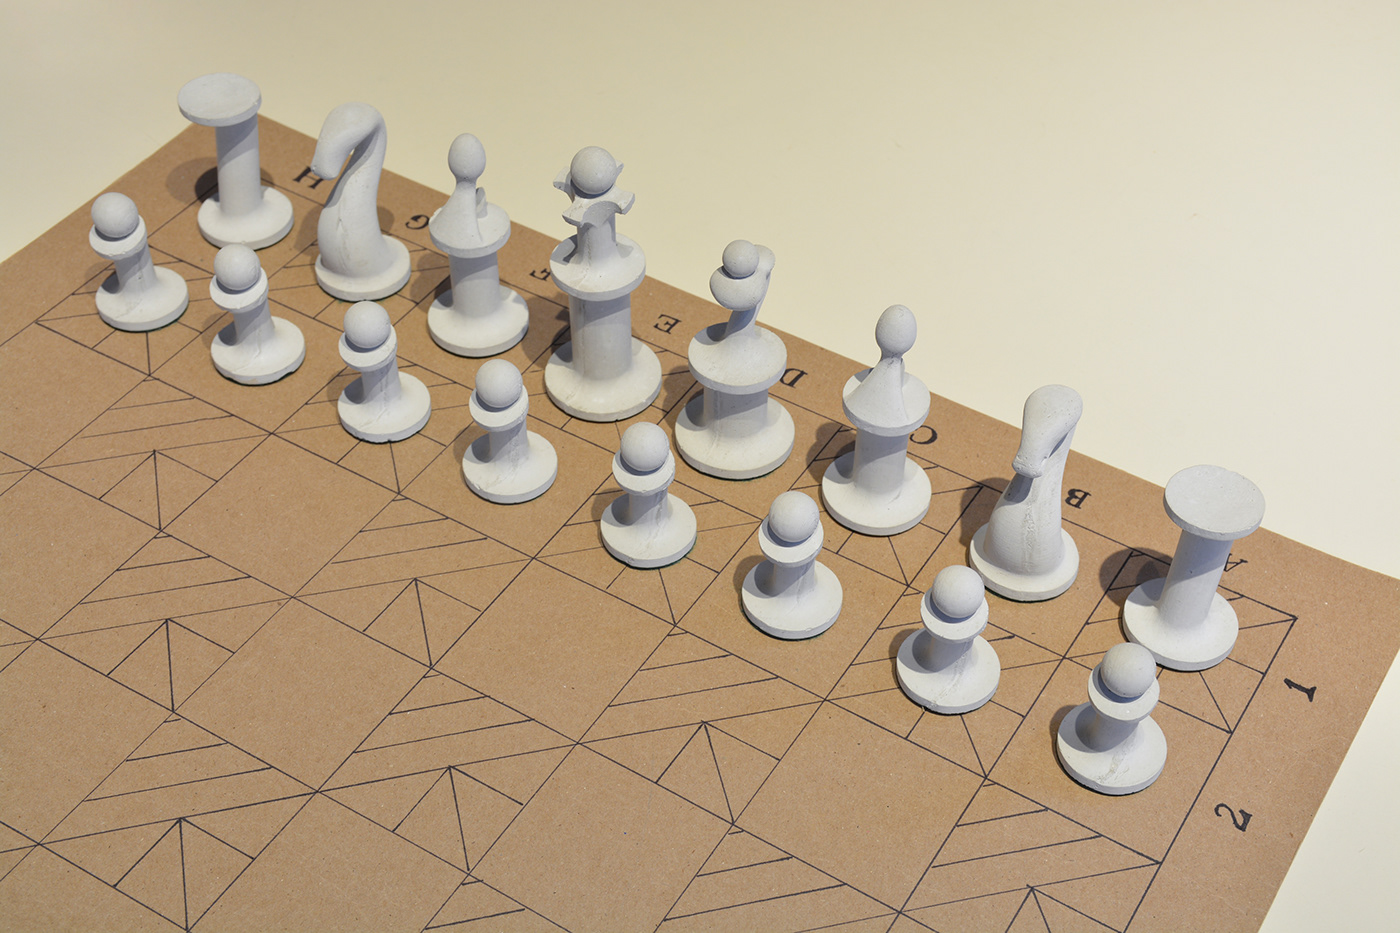 3D chess concrete échecs game jeu modern object objet Typographie